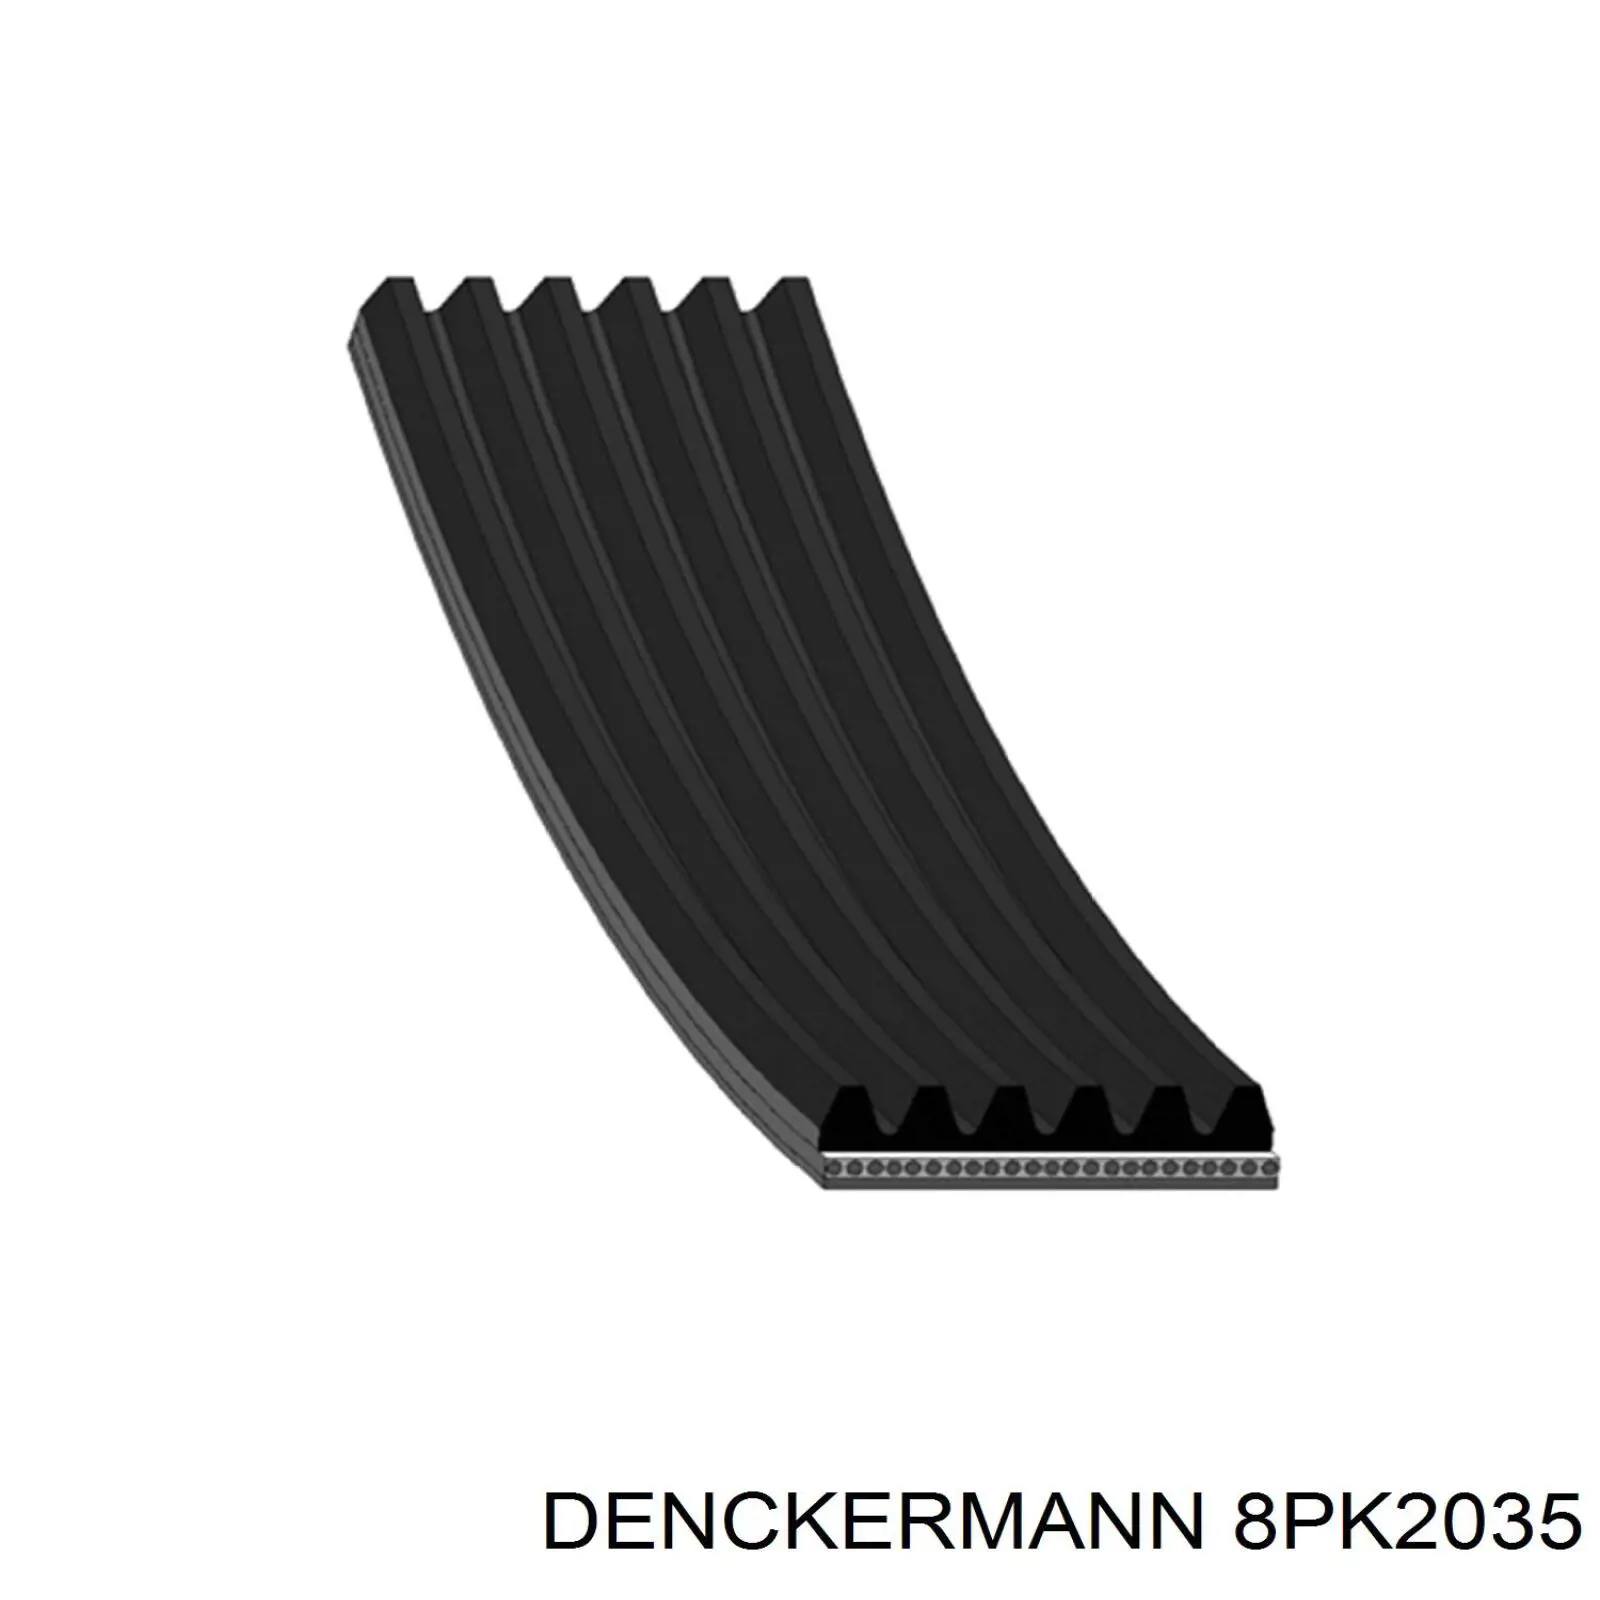 8PK2035 Denckermann correa trapezoidal